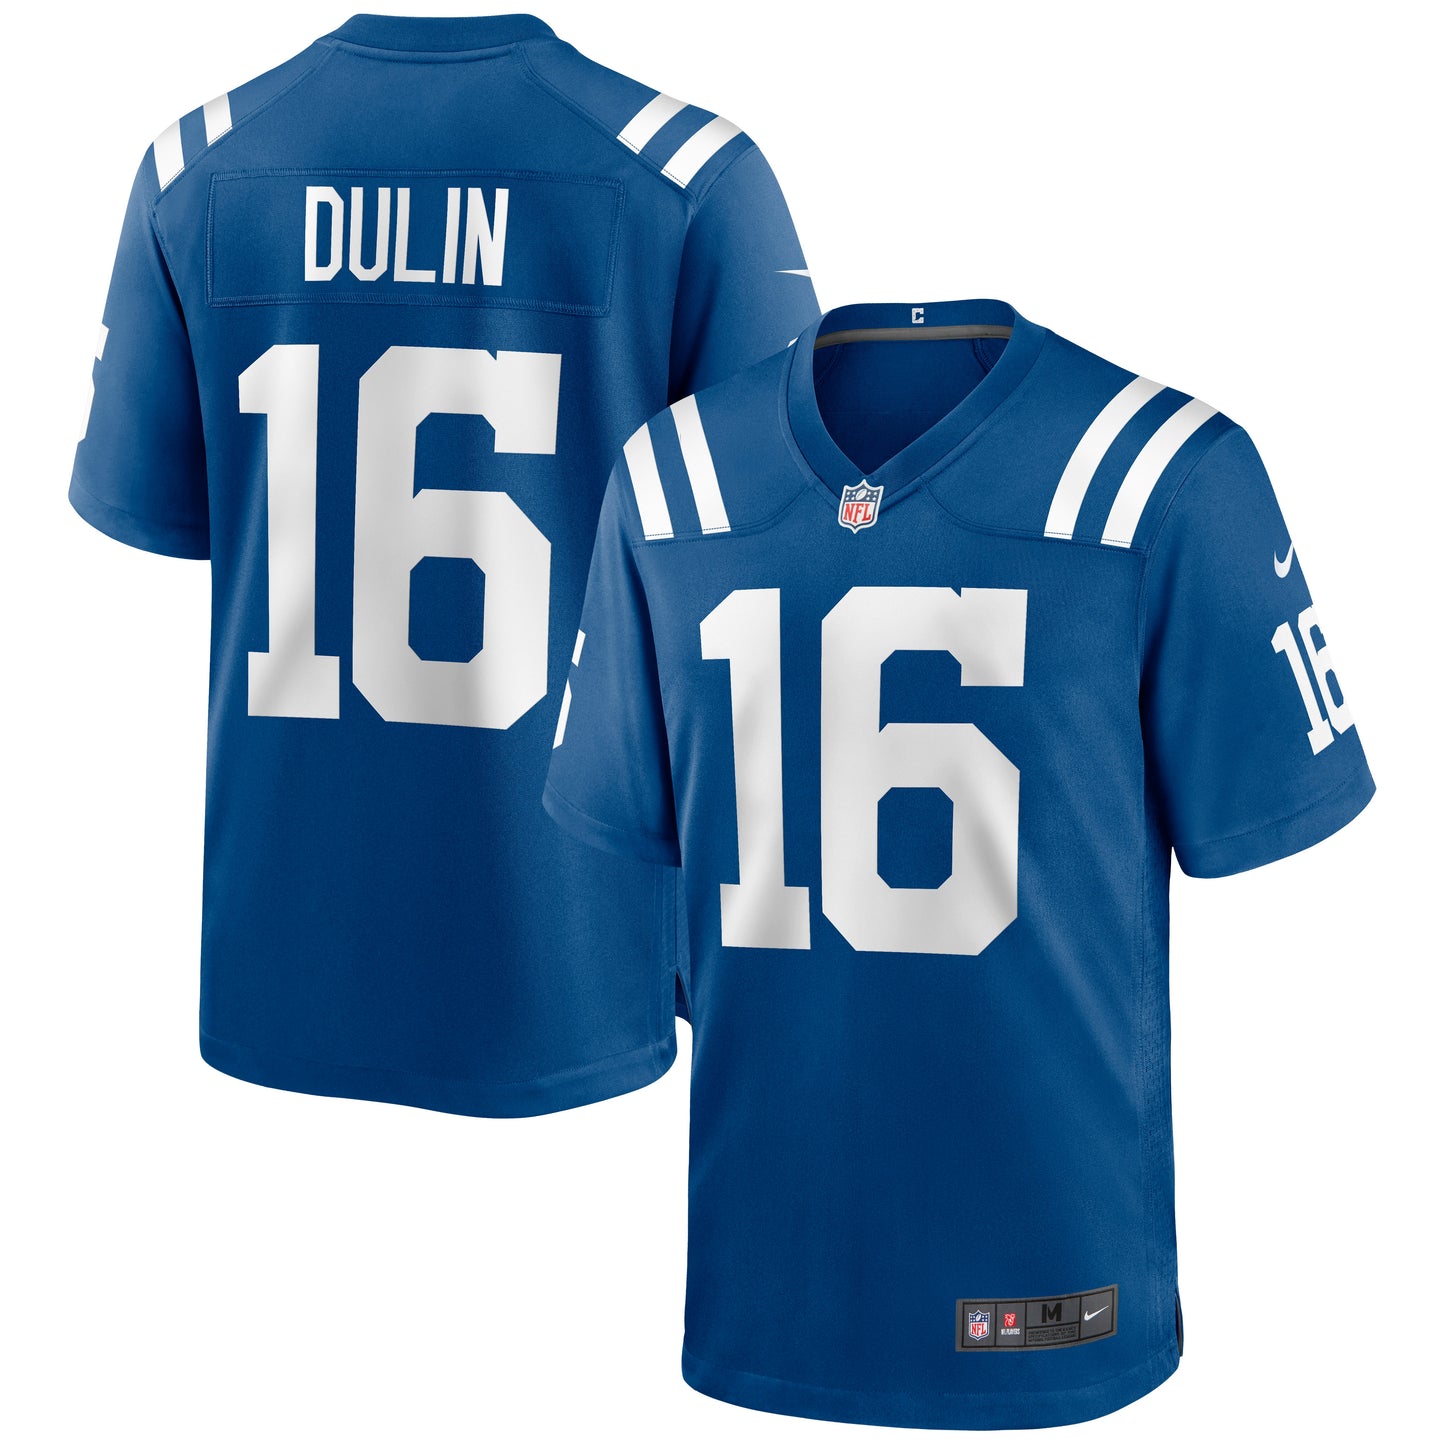 Ashton Dulin Indianapolis Colts Nike Game Jersey - Royal